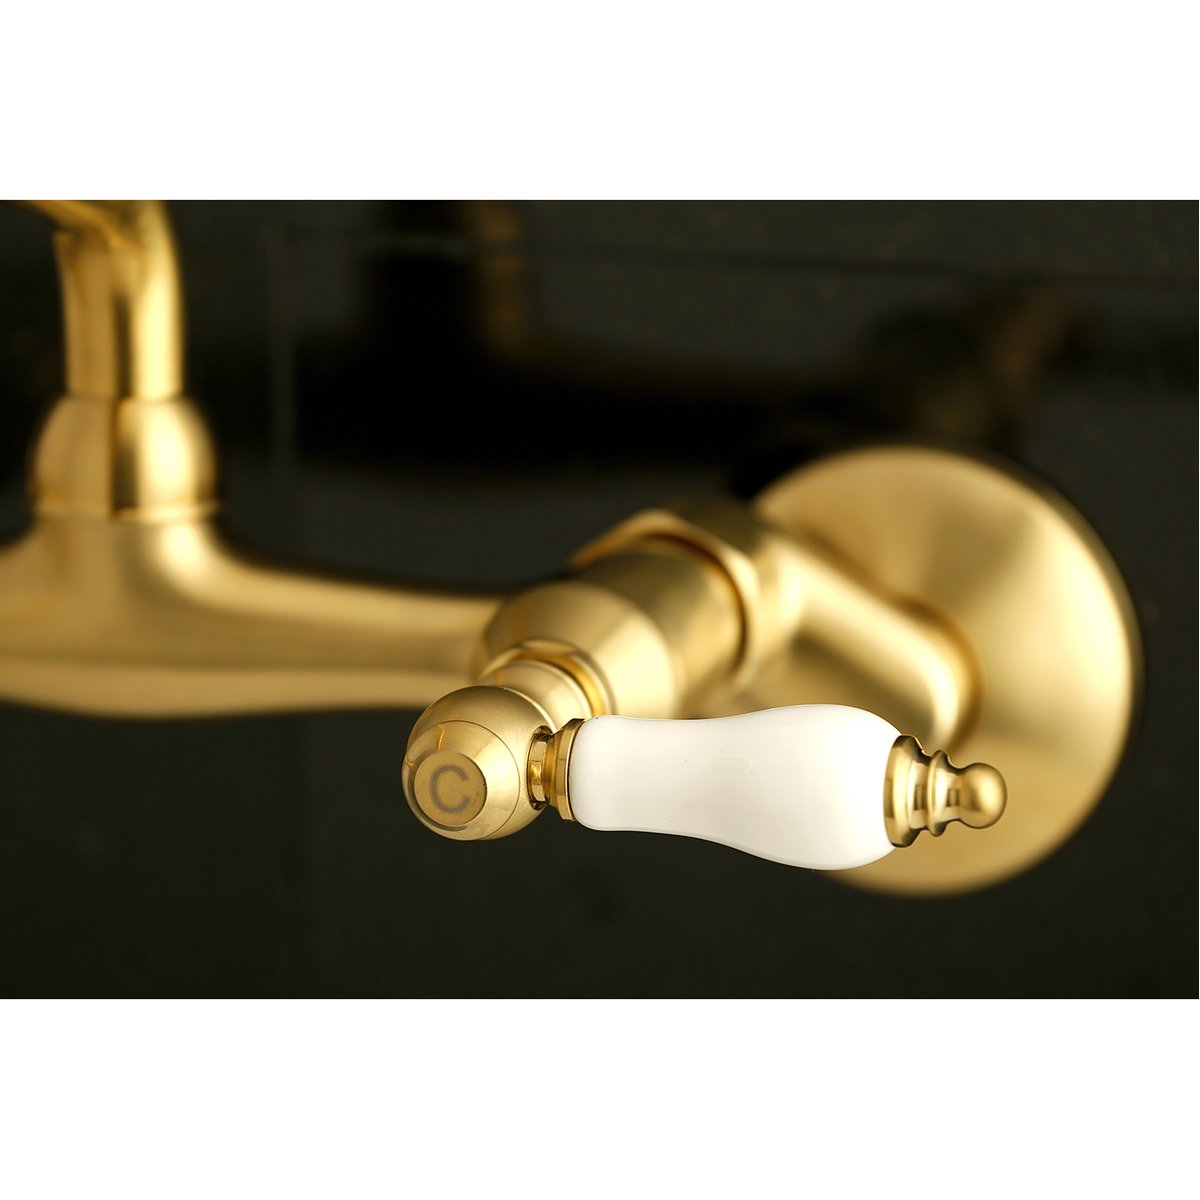 Kingston Brass Wall Mount 2-Handle Kitchen Faucet